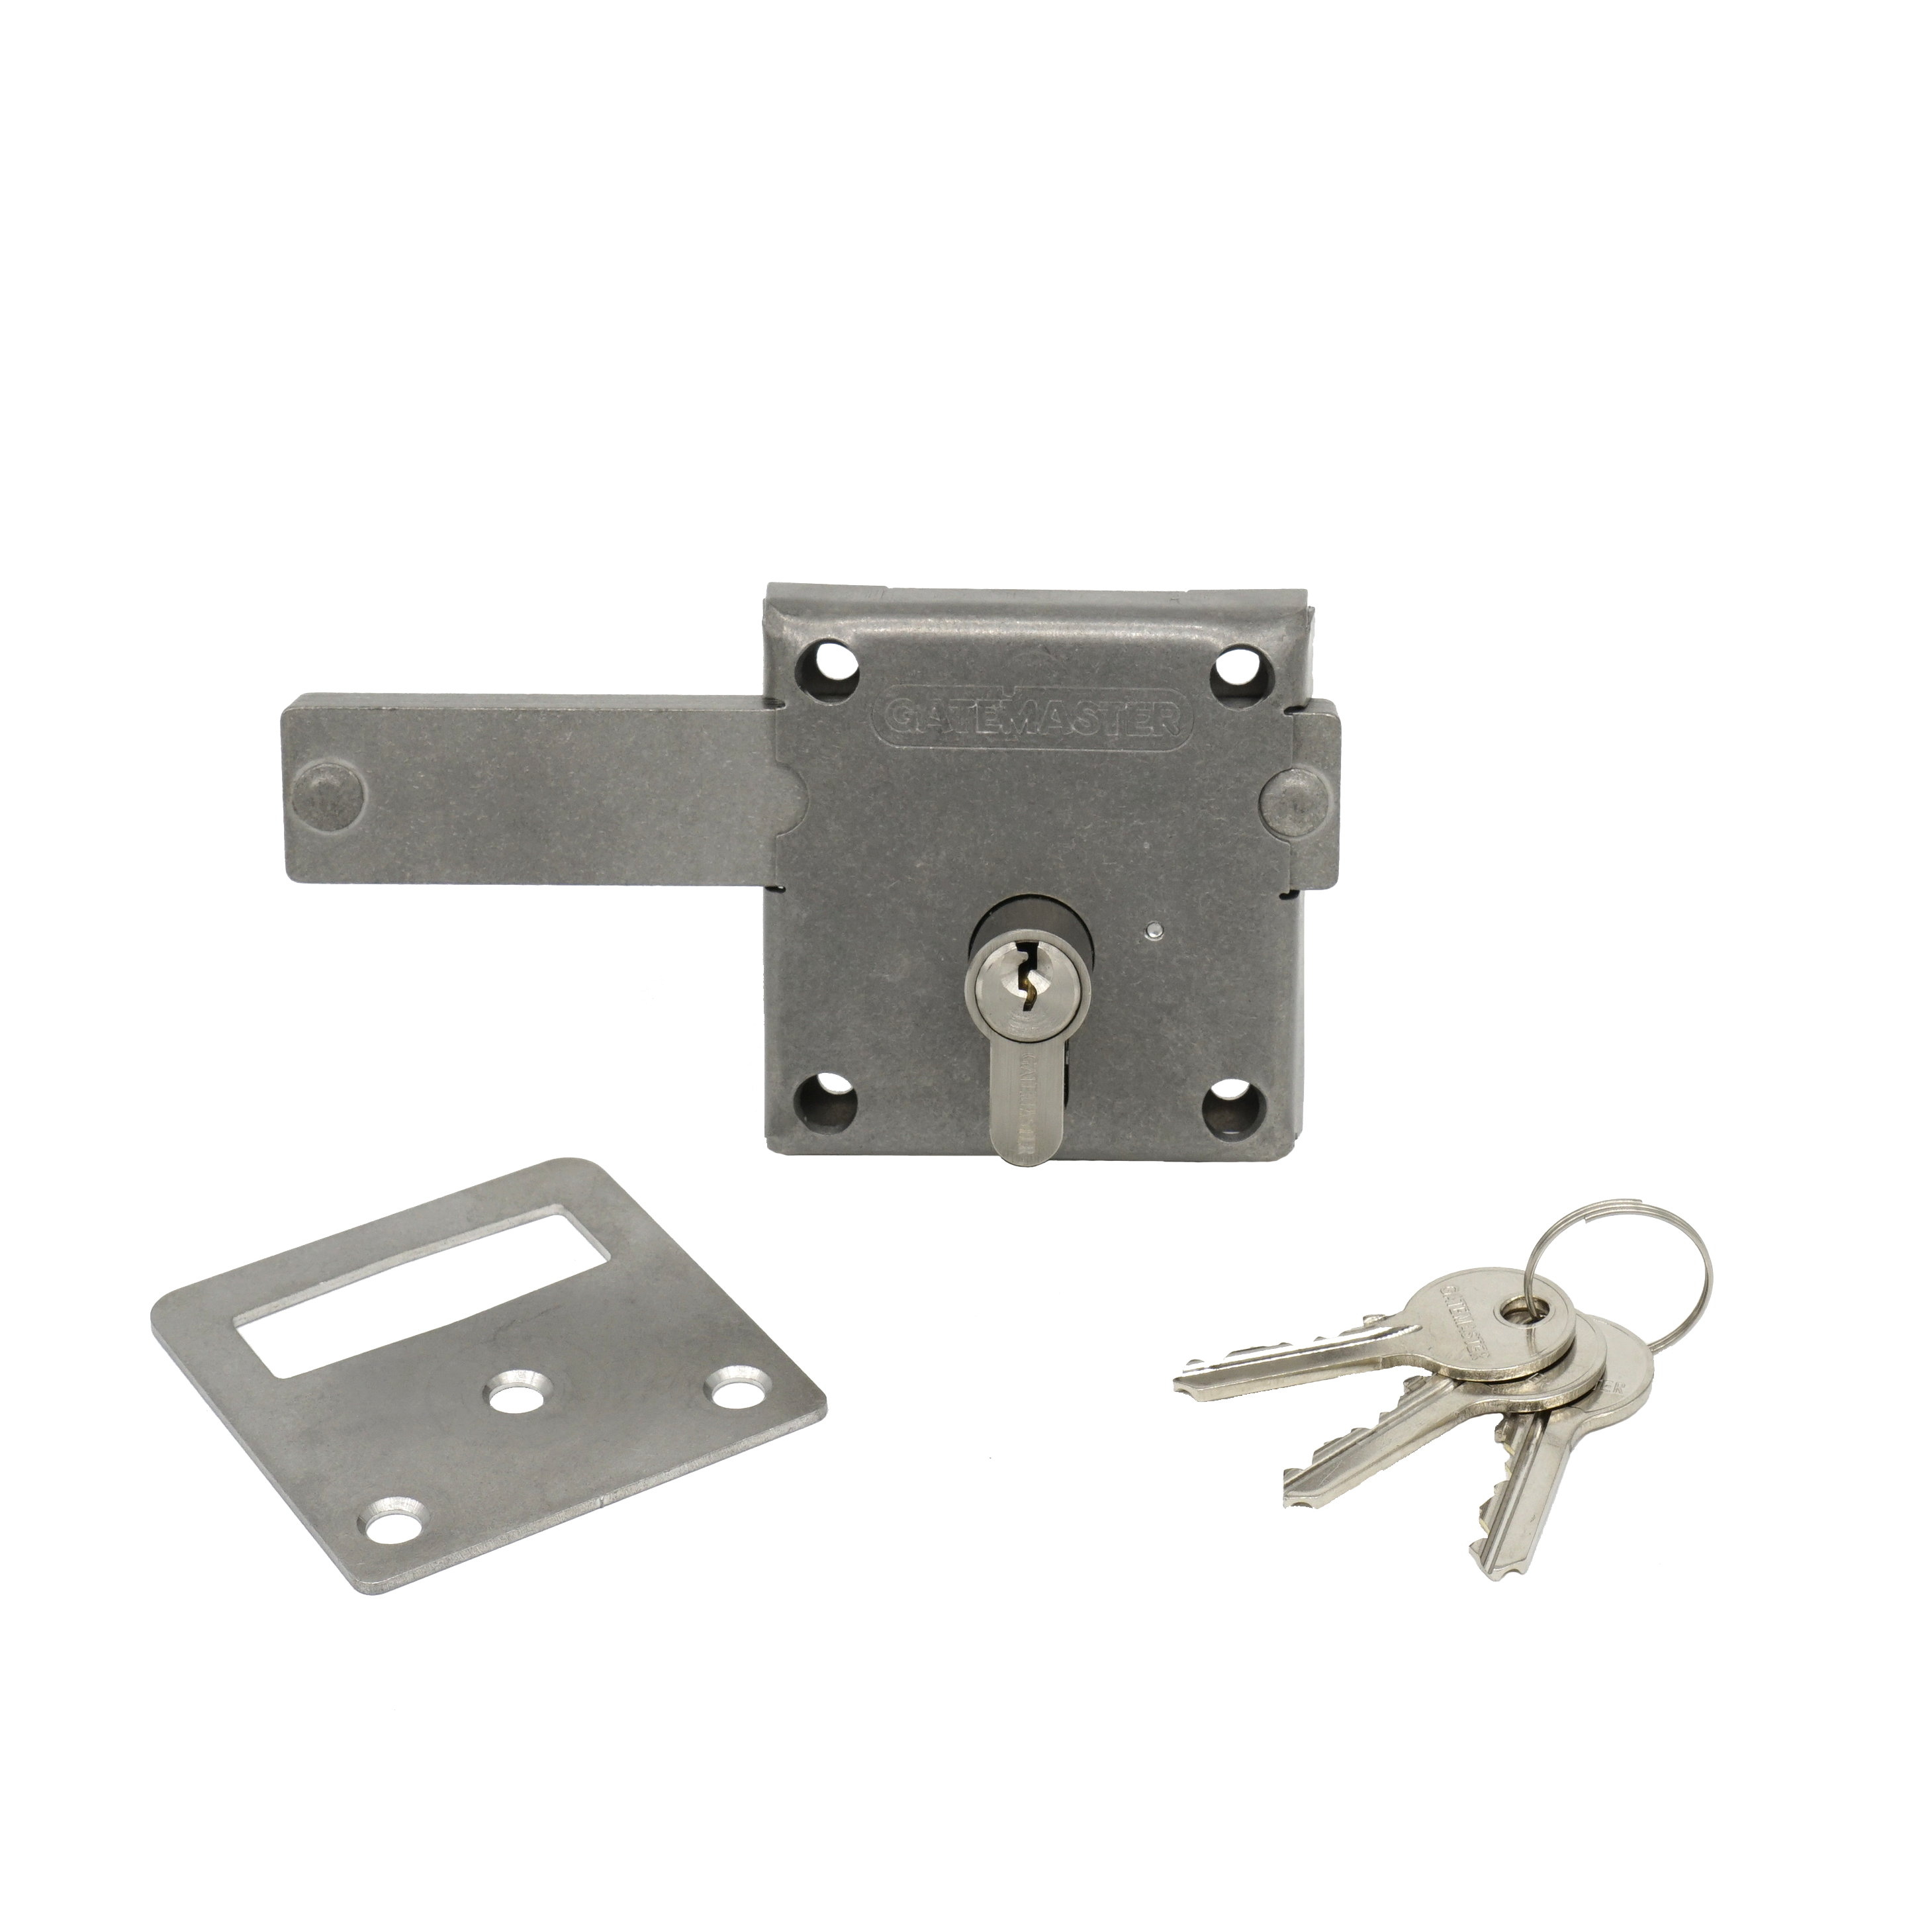 Gatemaster locking bolt surface fixed gate lock for wooden or metal gates